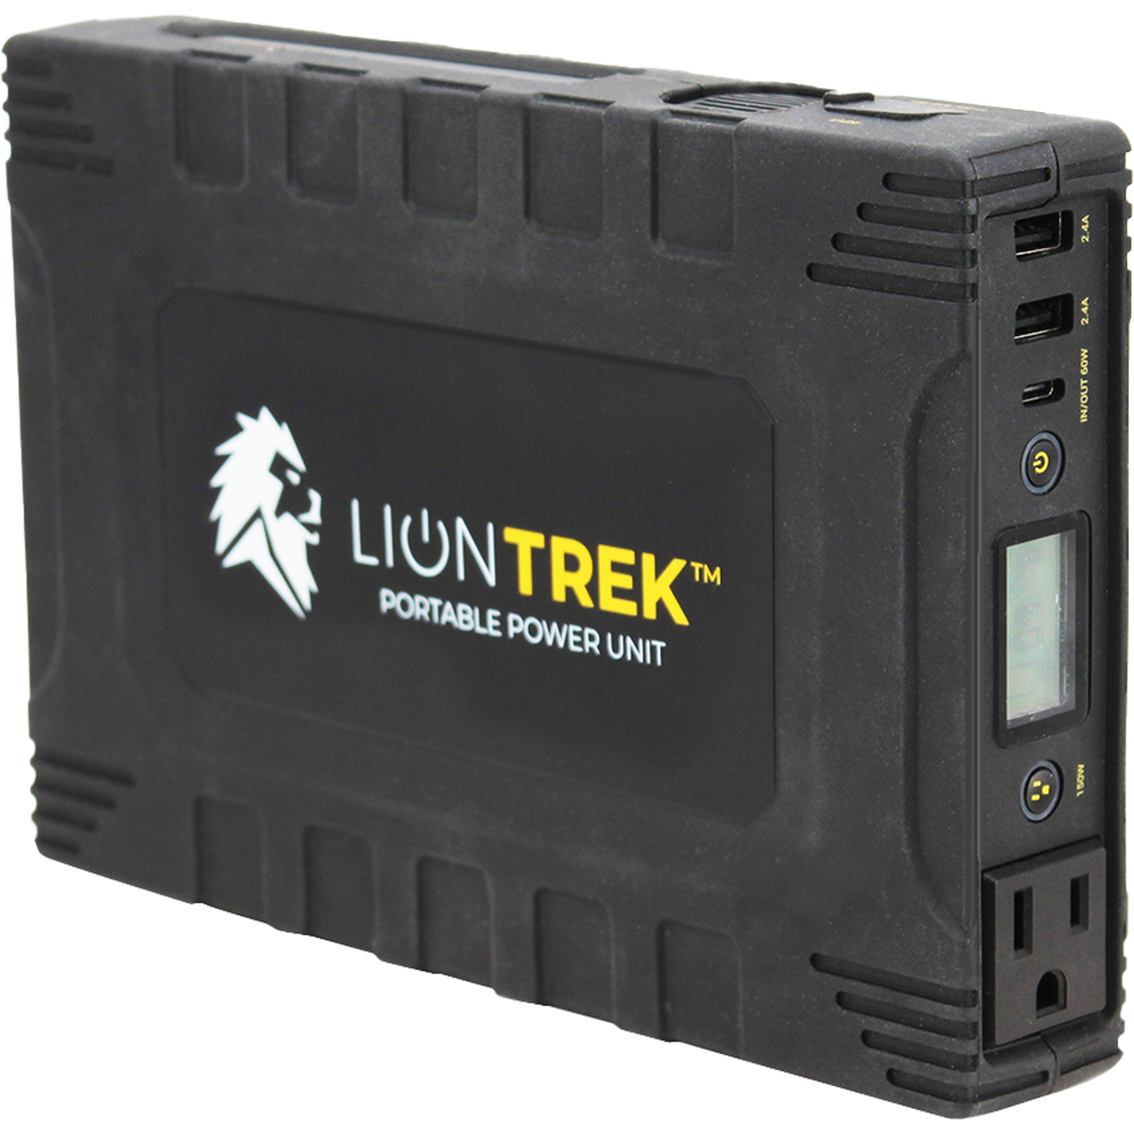 Lion Energy Trek Generator - Image 2 of 7